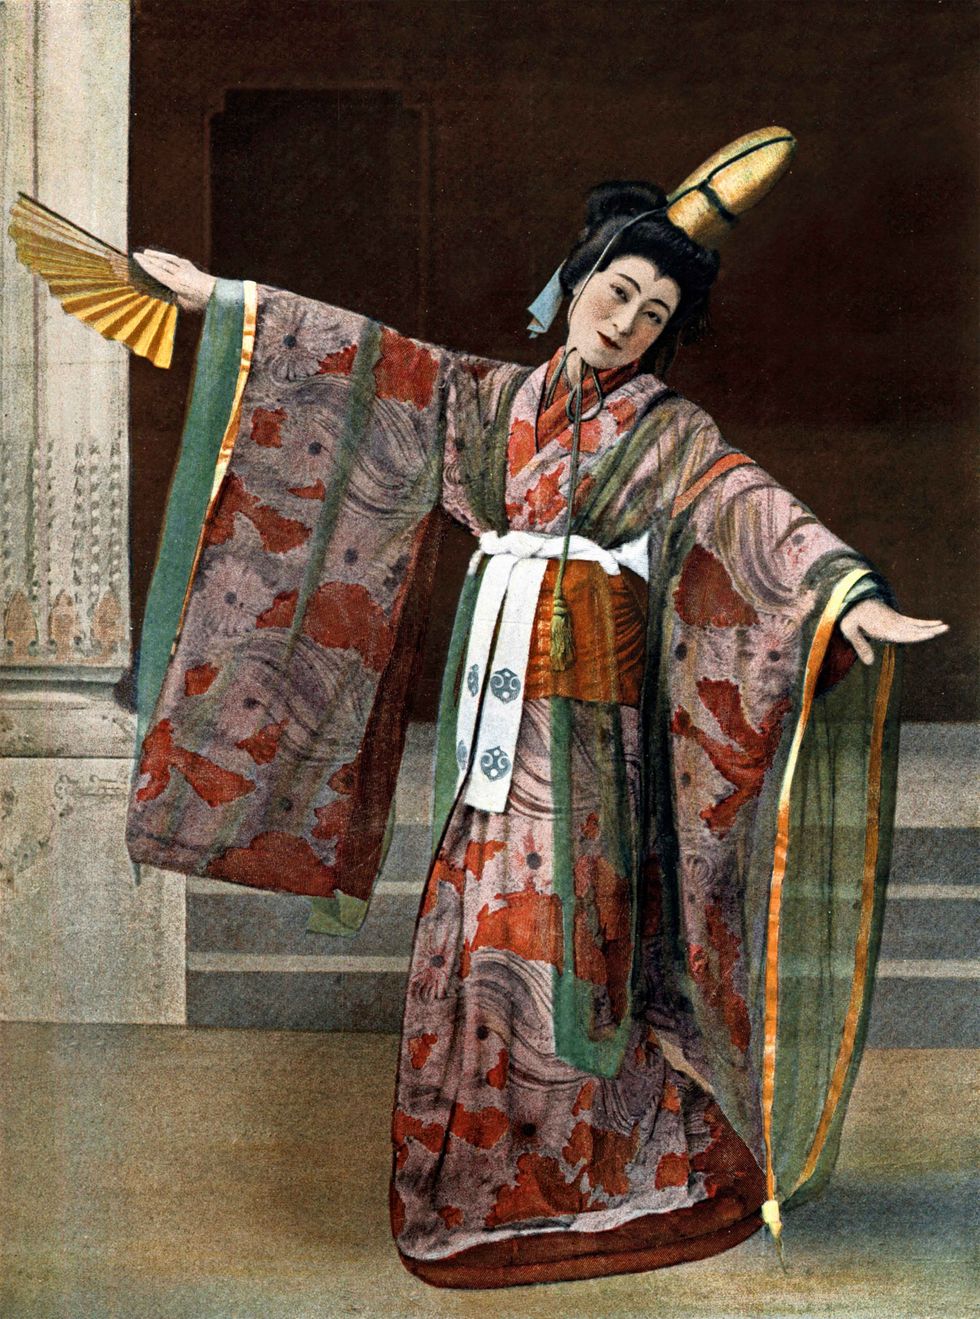 Sada Yacco in het stuk de Geisha en de ridder Foto uit de krant Le Thatre oktober 1900